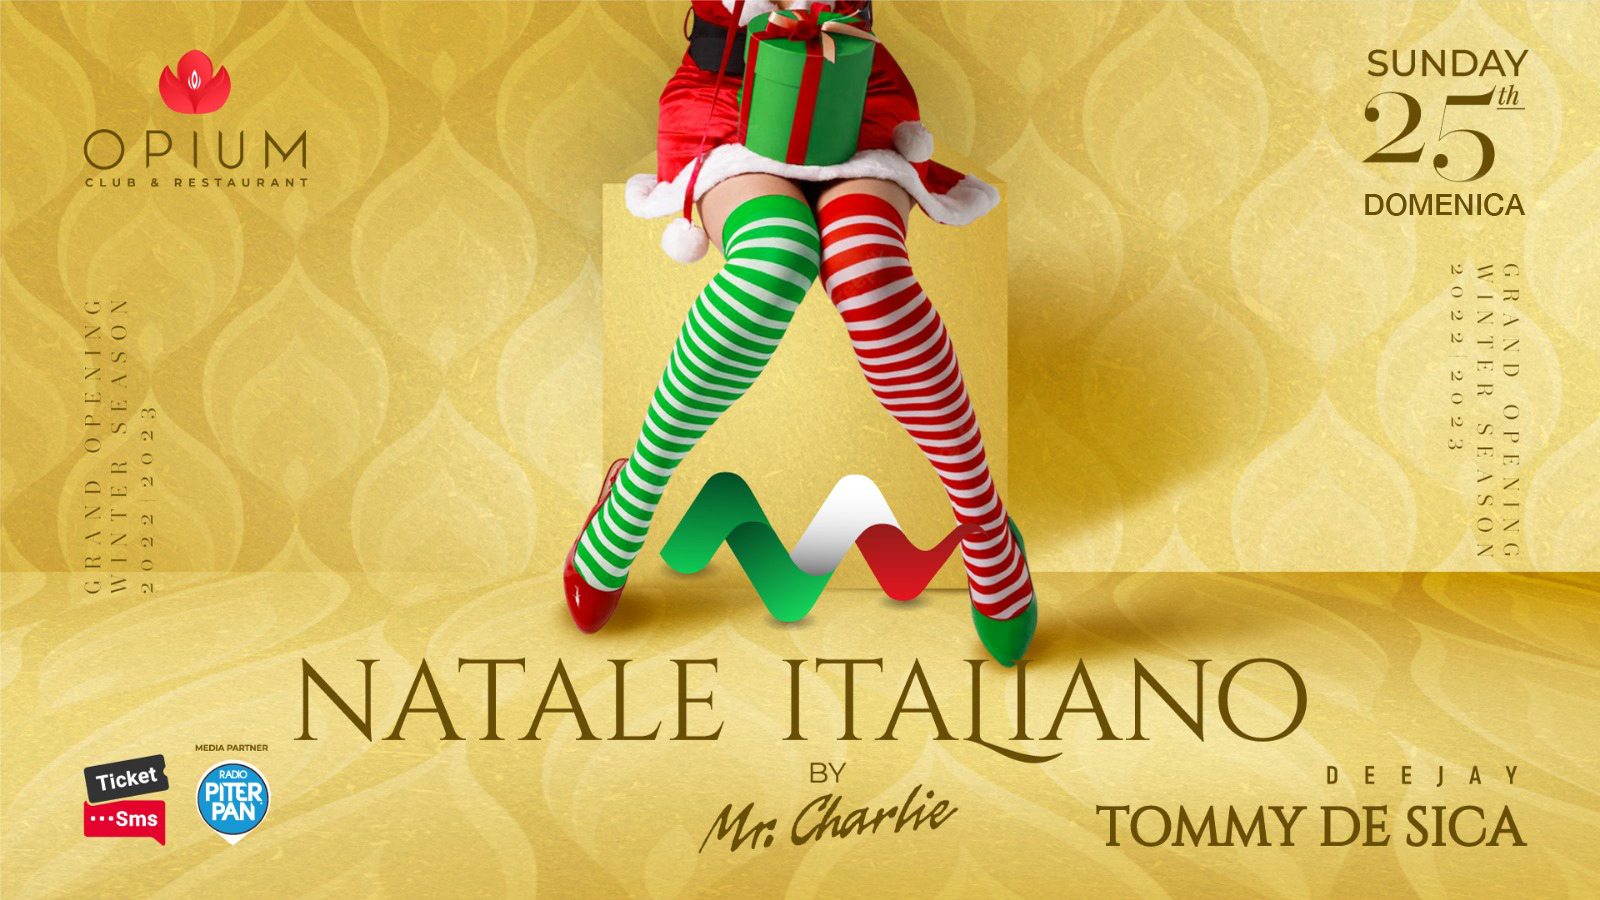 OPIUM - NATALE ITALIANO by Mr.Charlie